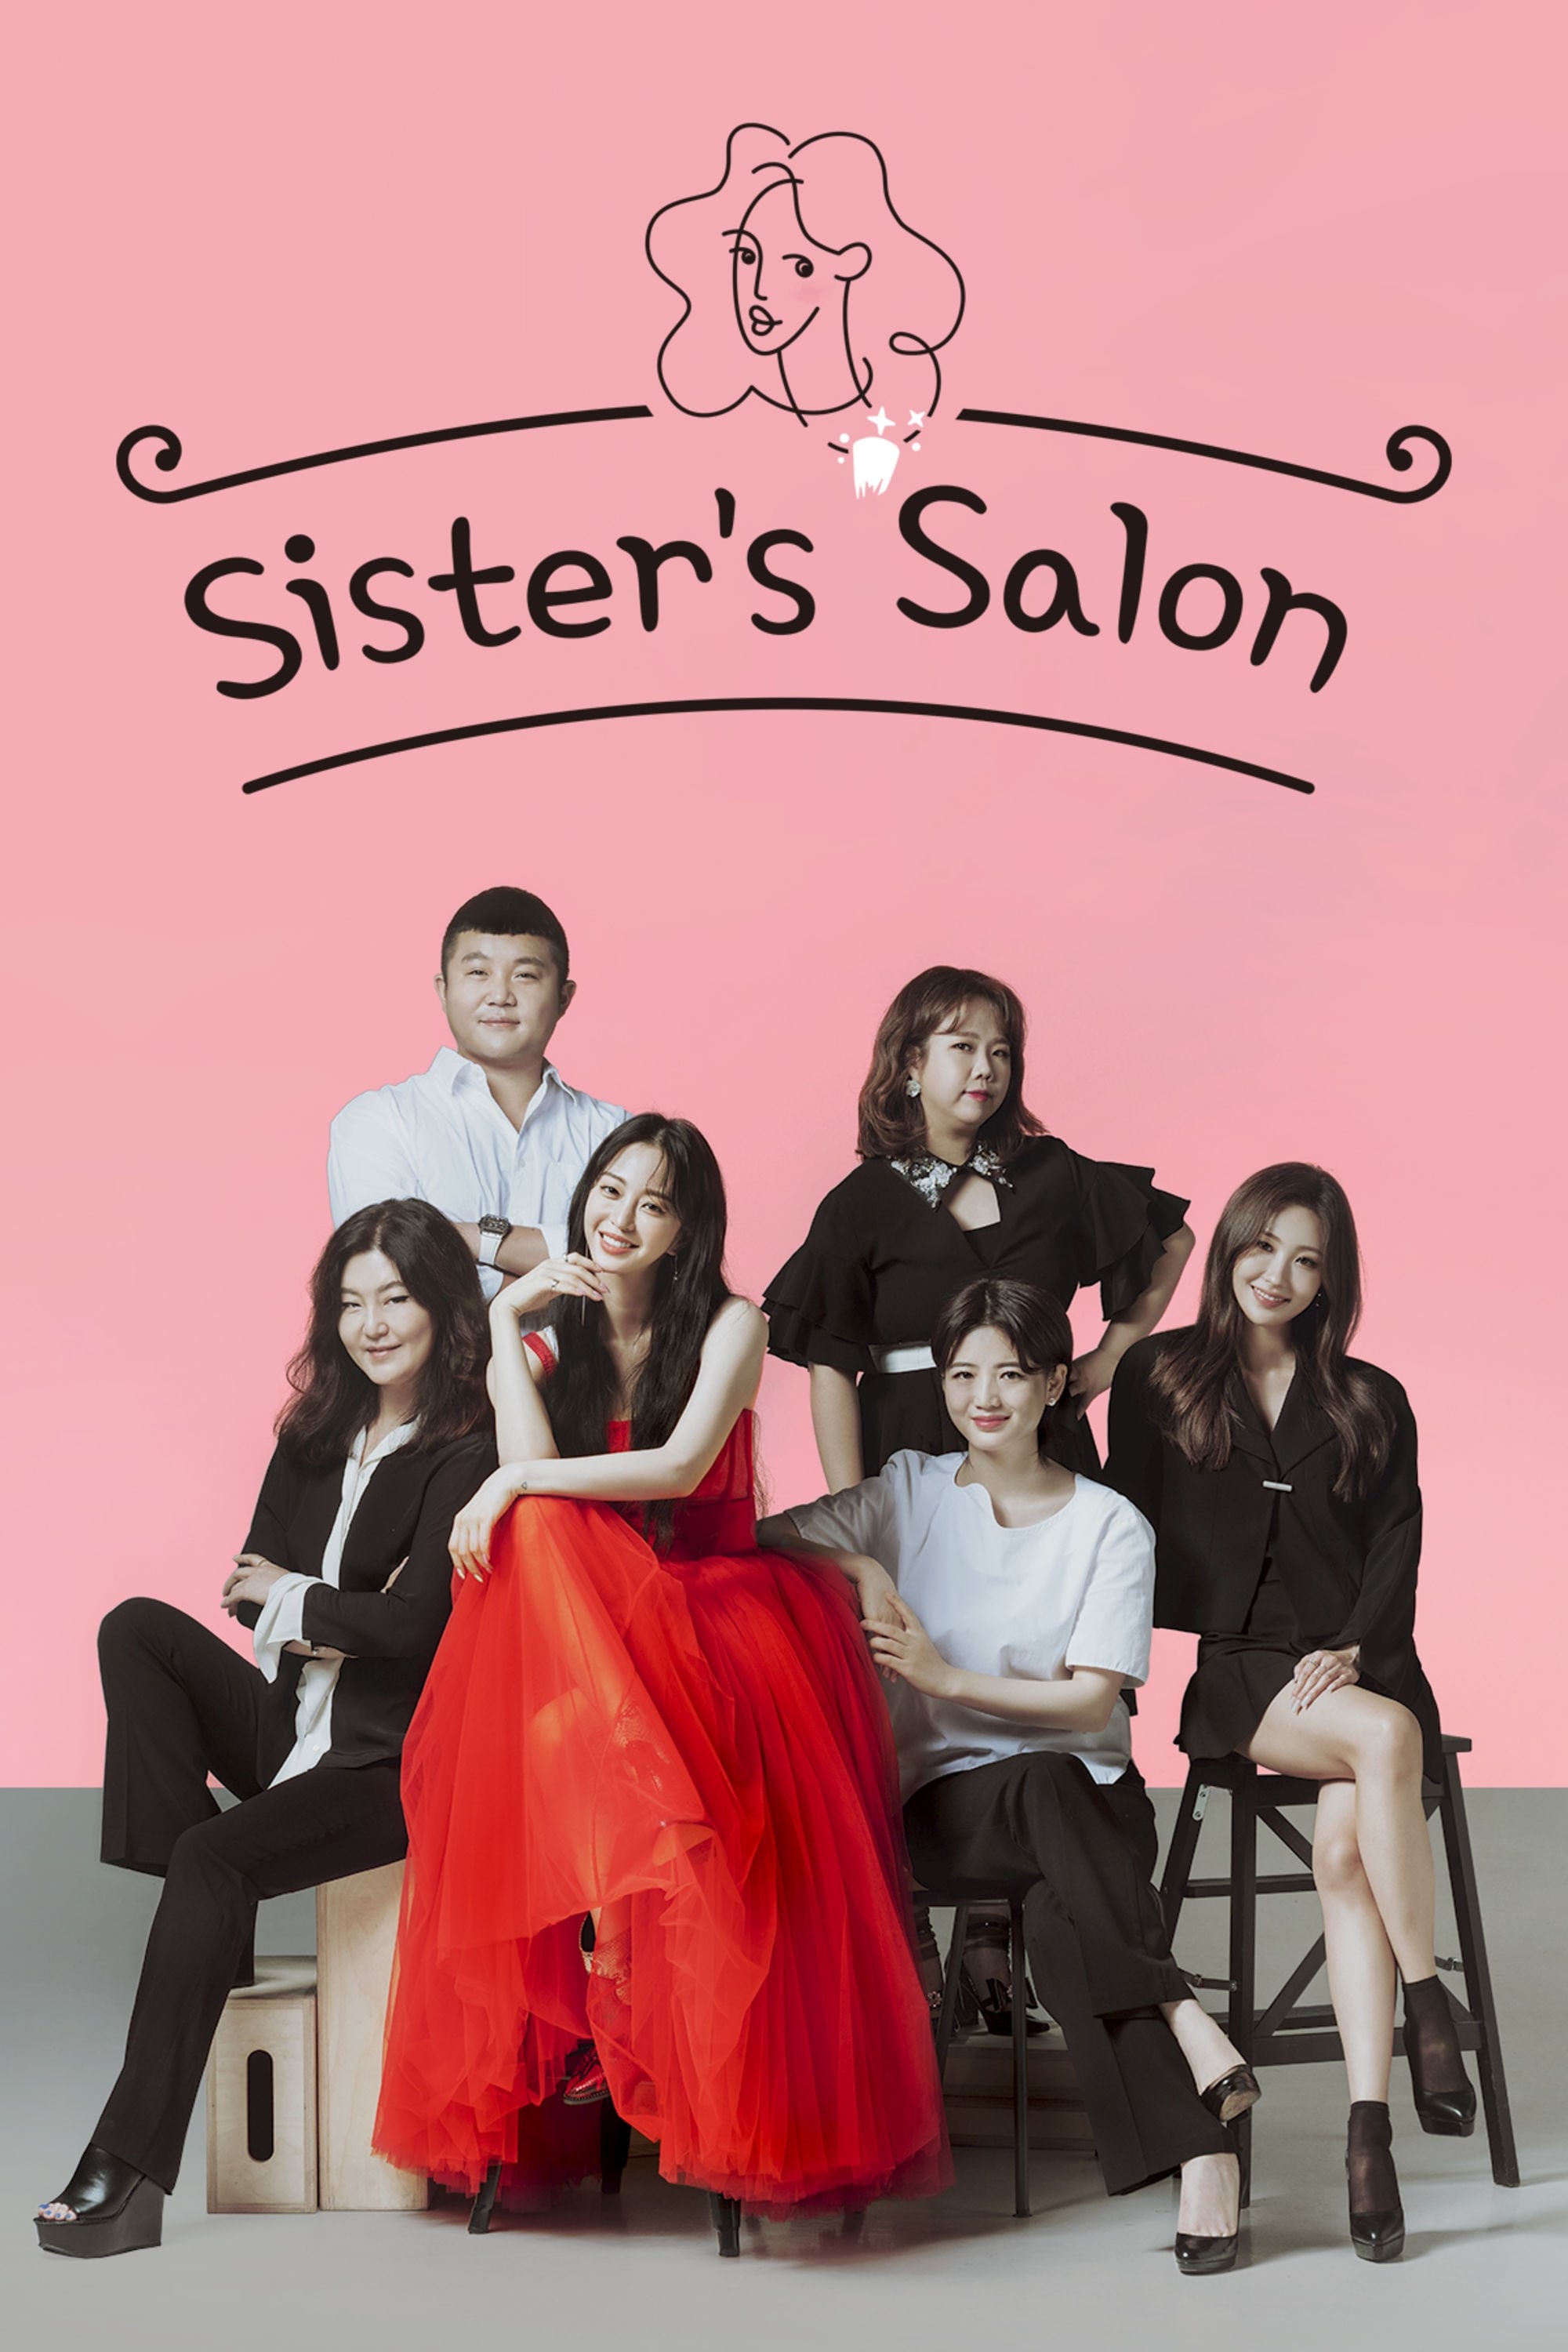 Sister's Salon